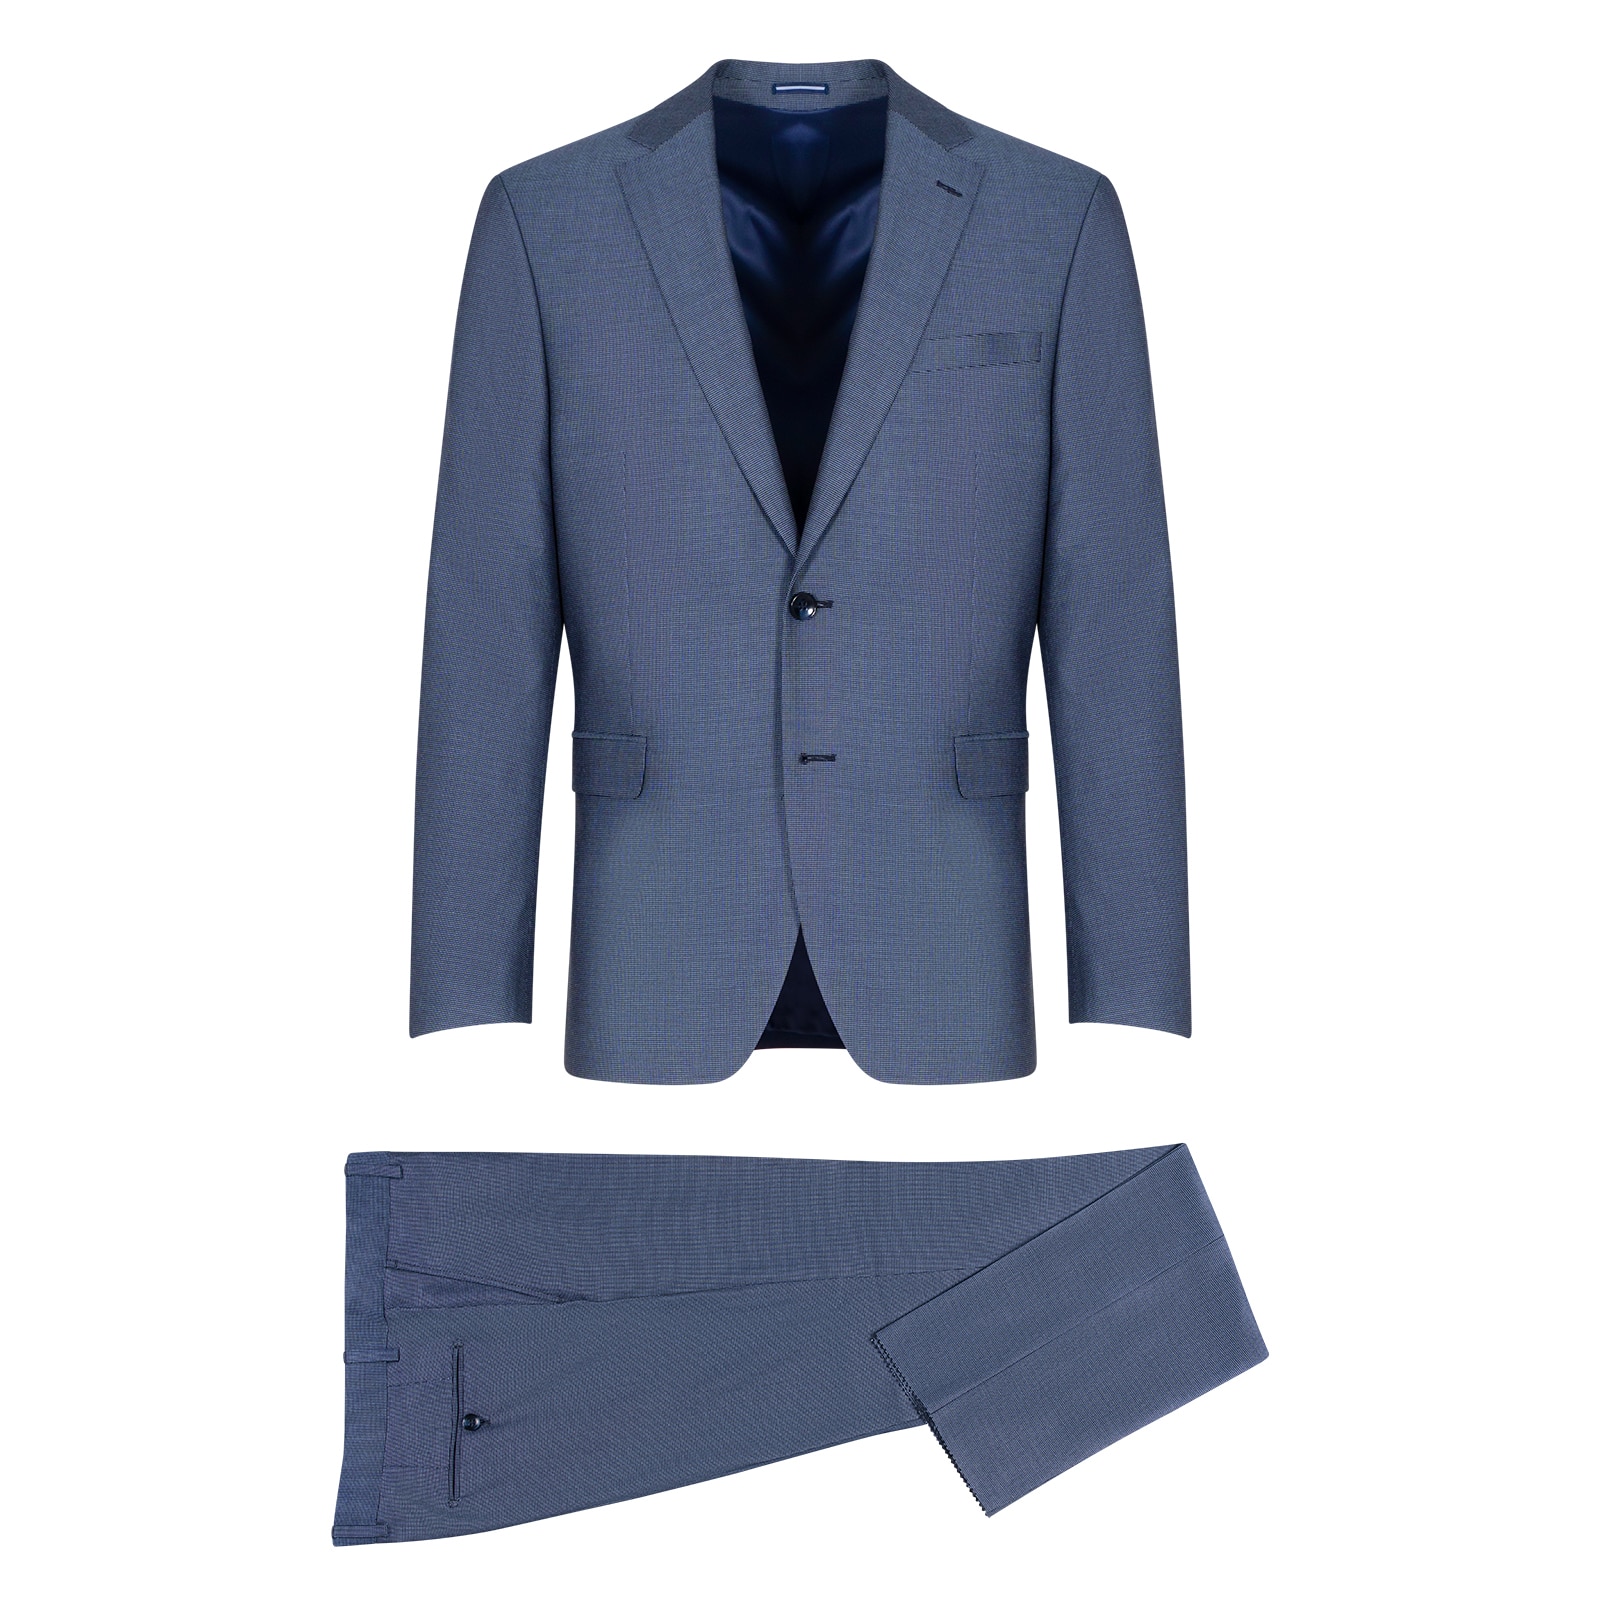 Prince Oliver Κοστούμι Μπλε Κυψελάκι 100% Wool Touch (Modern Fit)